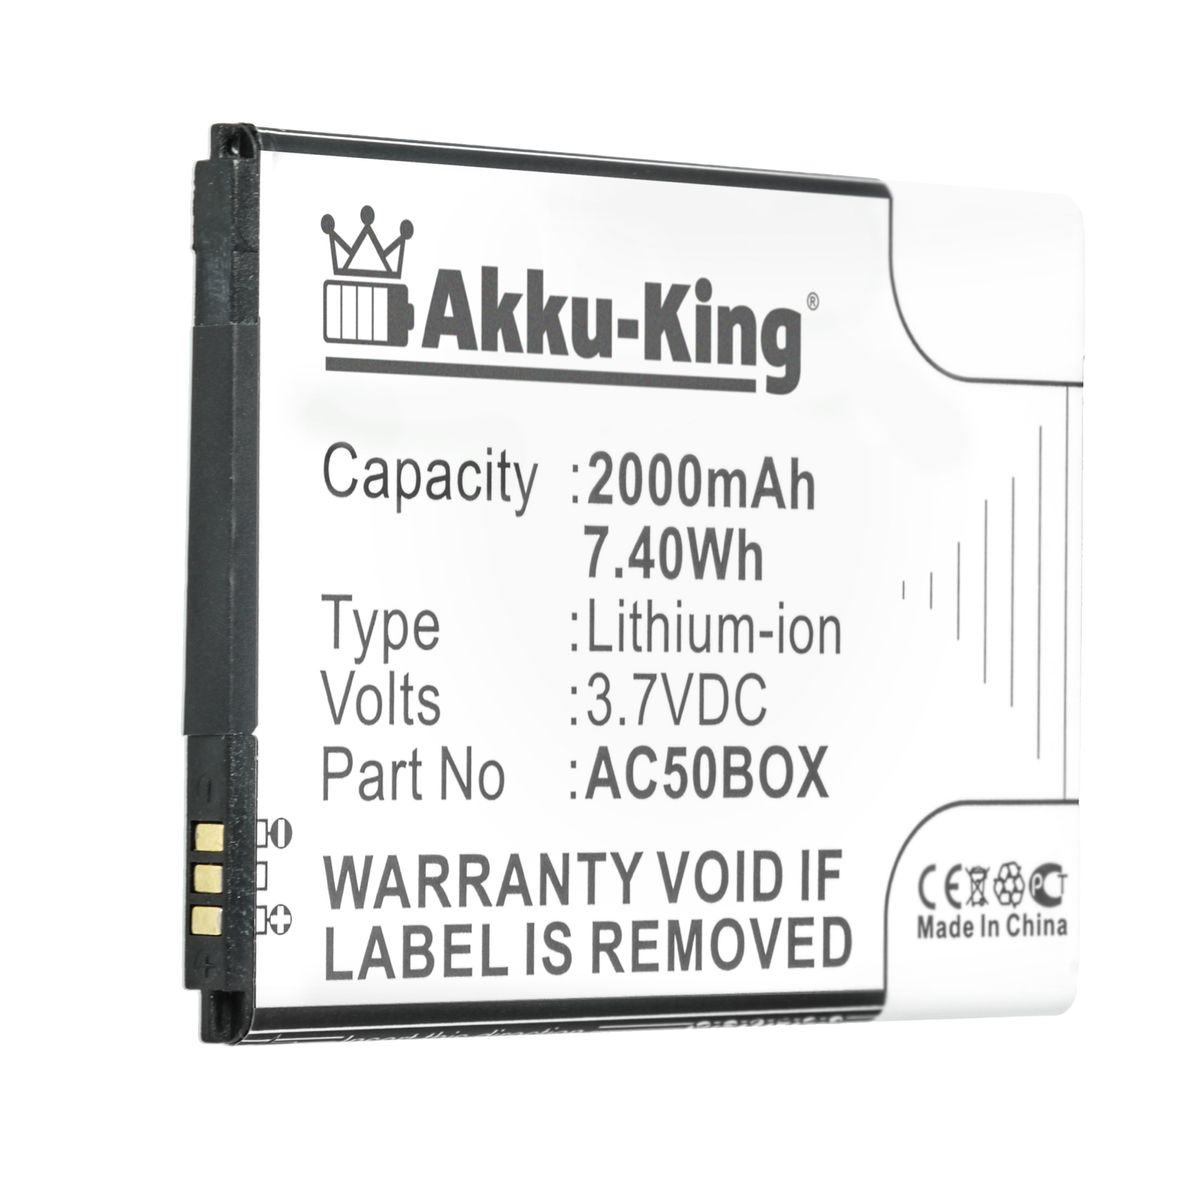 für Volt, Akku Archos AKKU-KING Handy-Akku, 3.7 Li-Ion AC50BOX 2000mAh